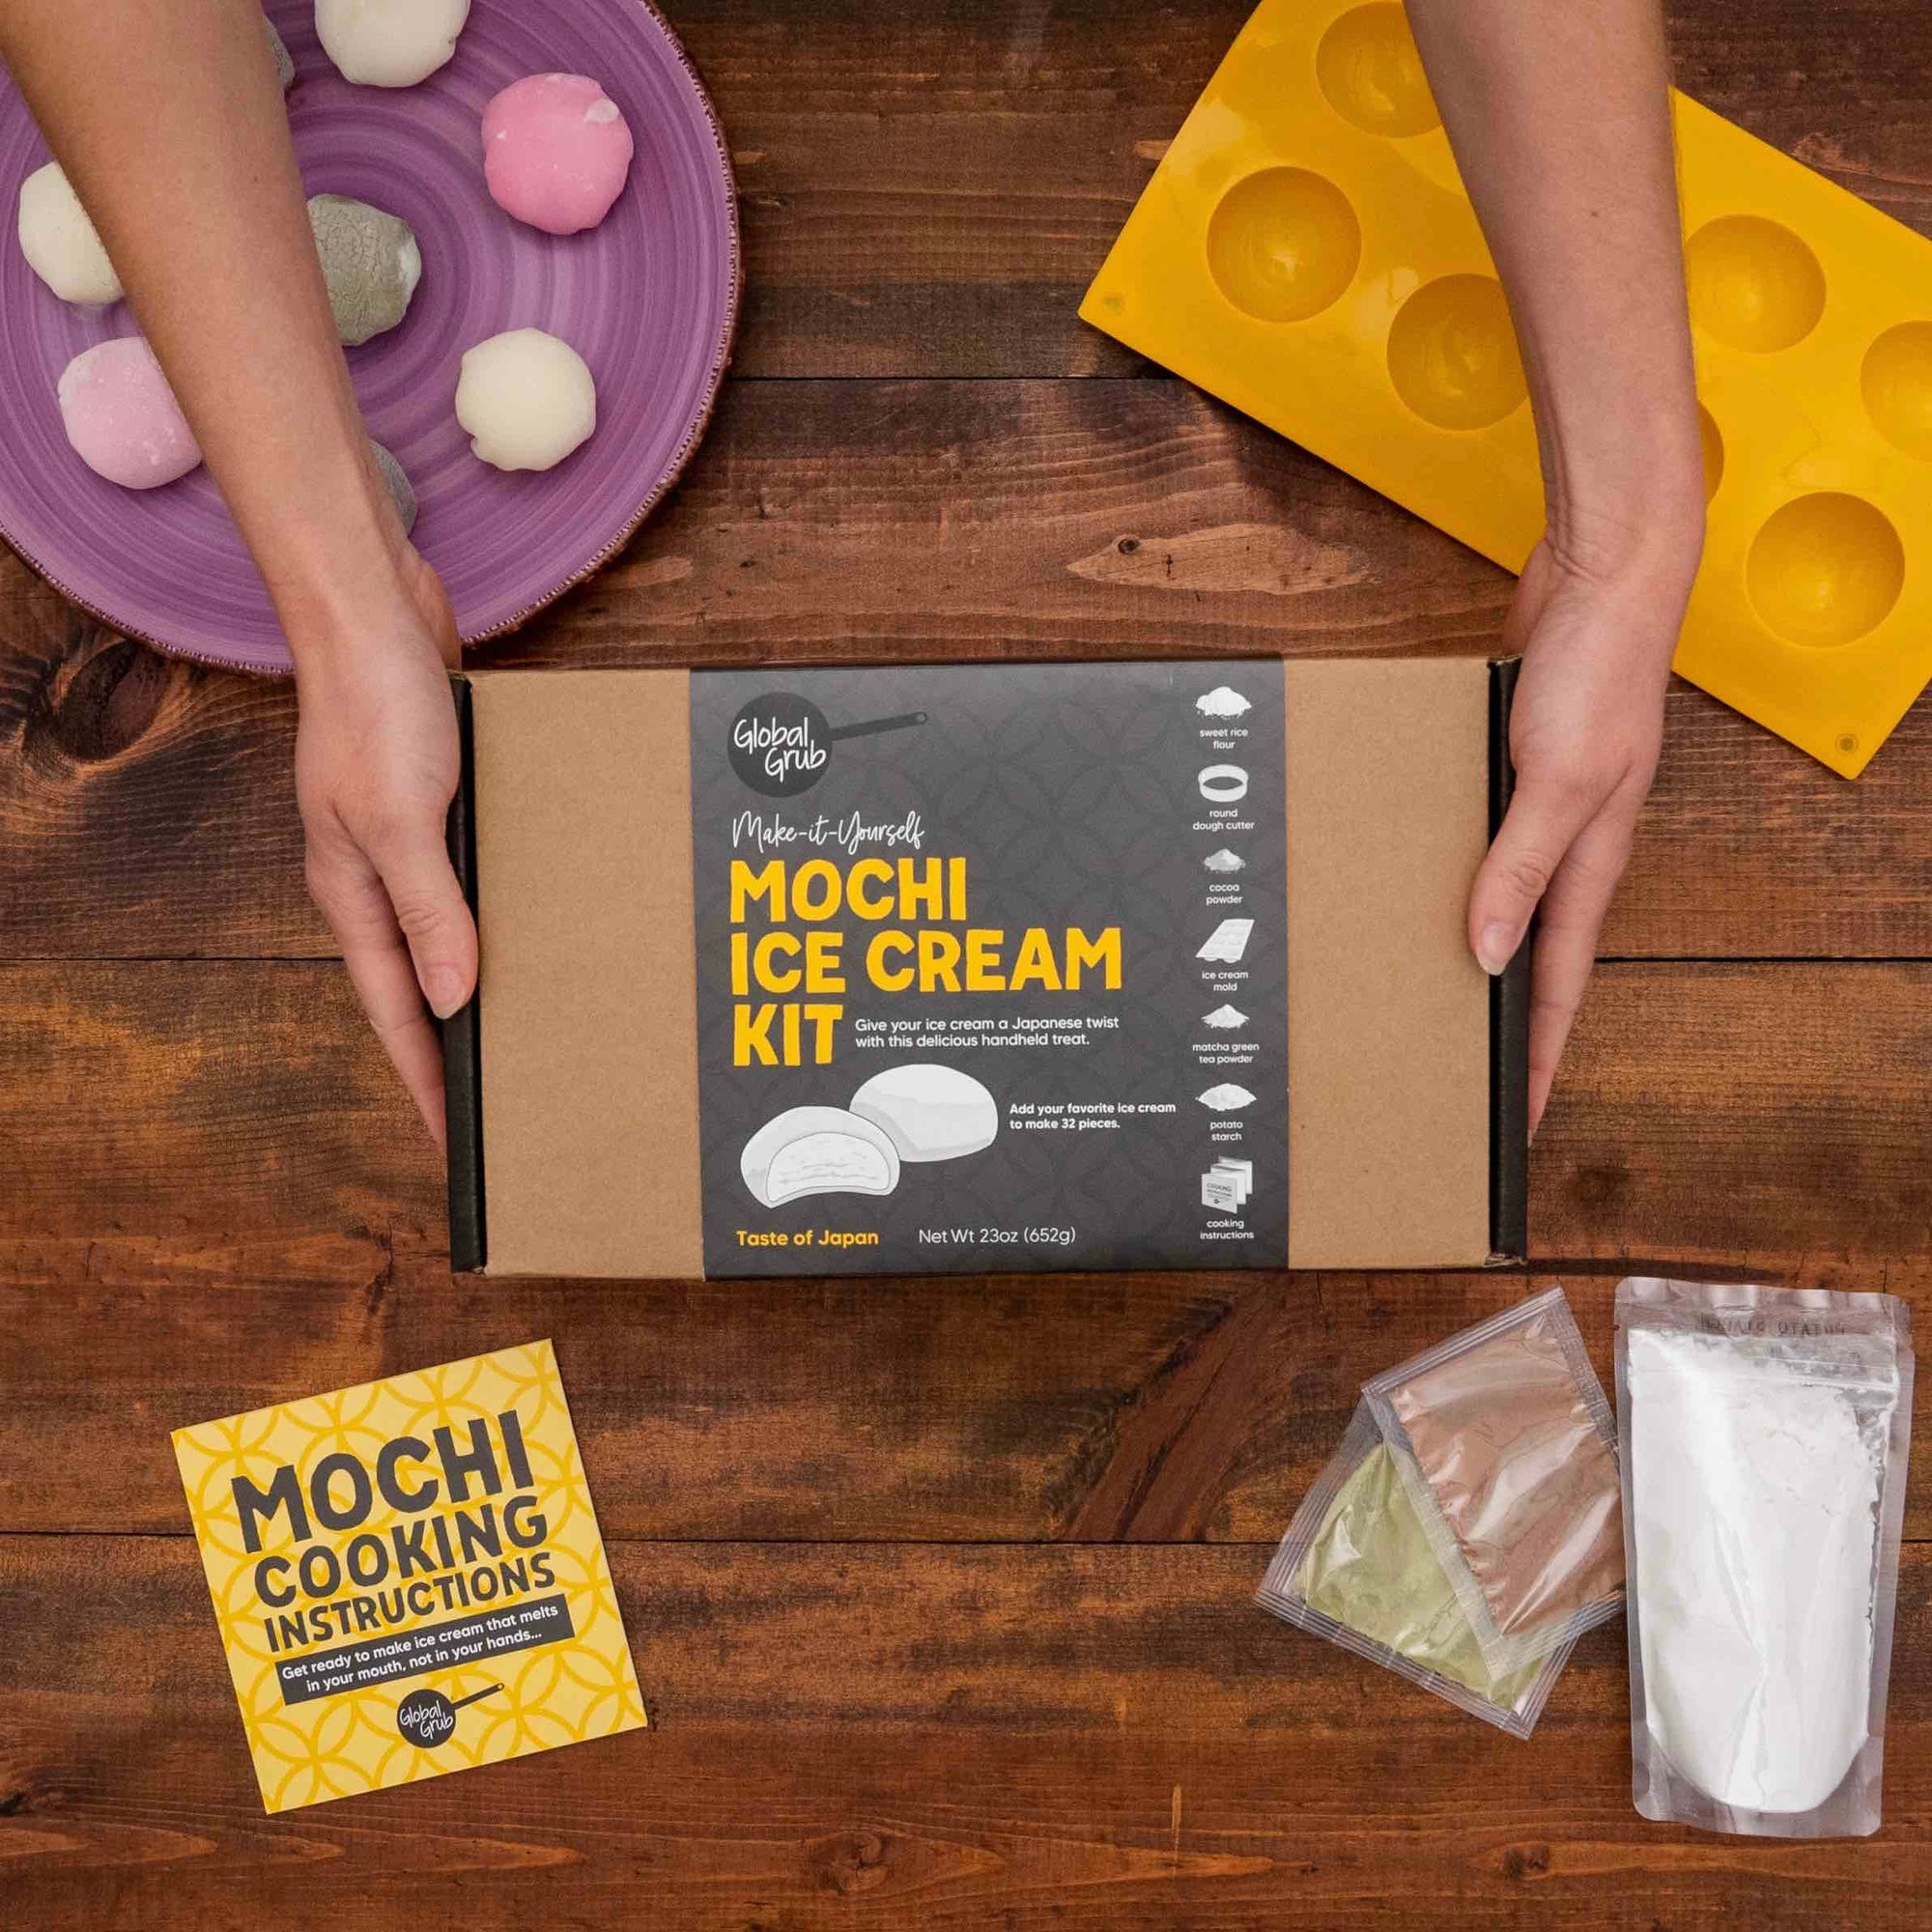 DIY Mochi Ice Cream Kit on Vimeo